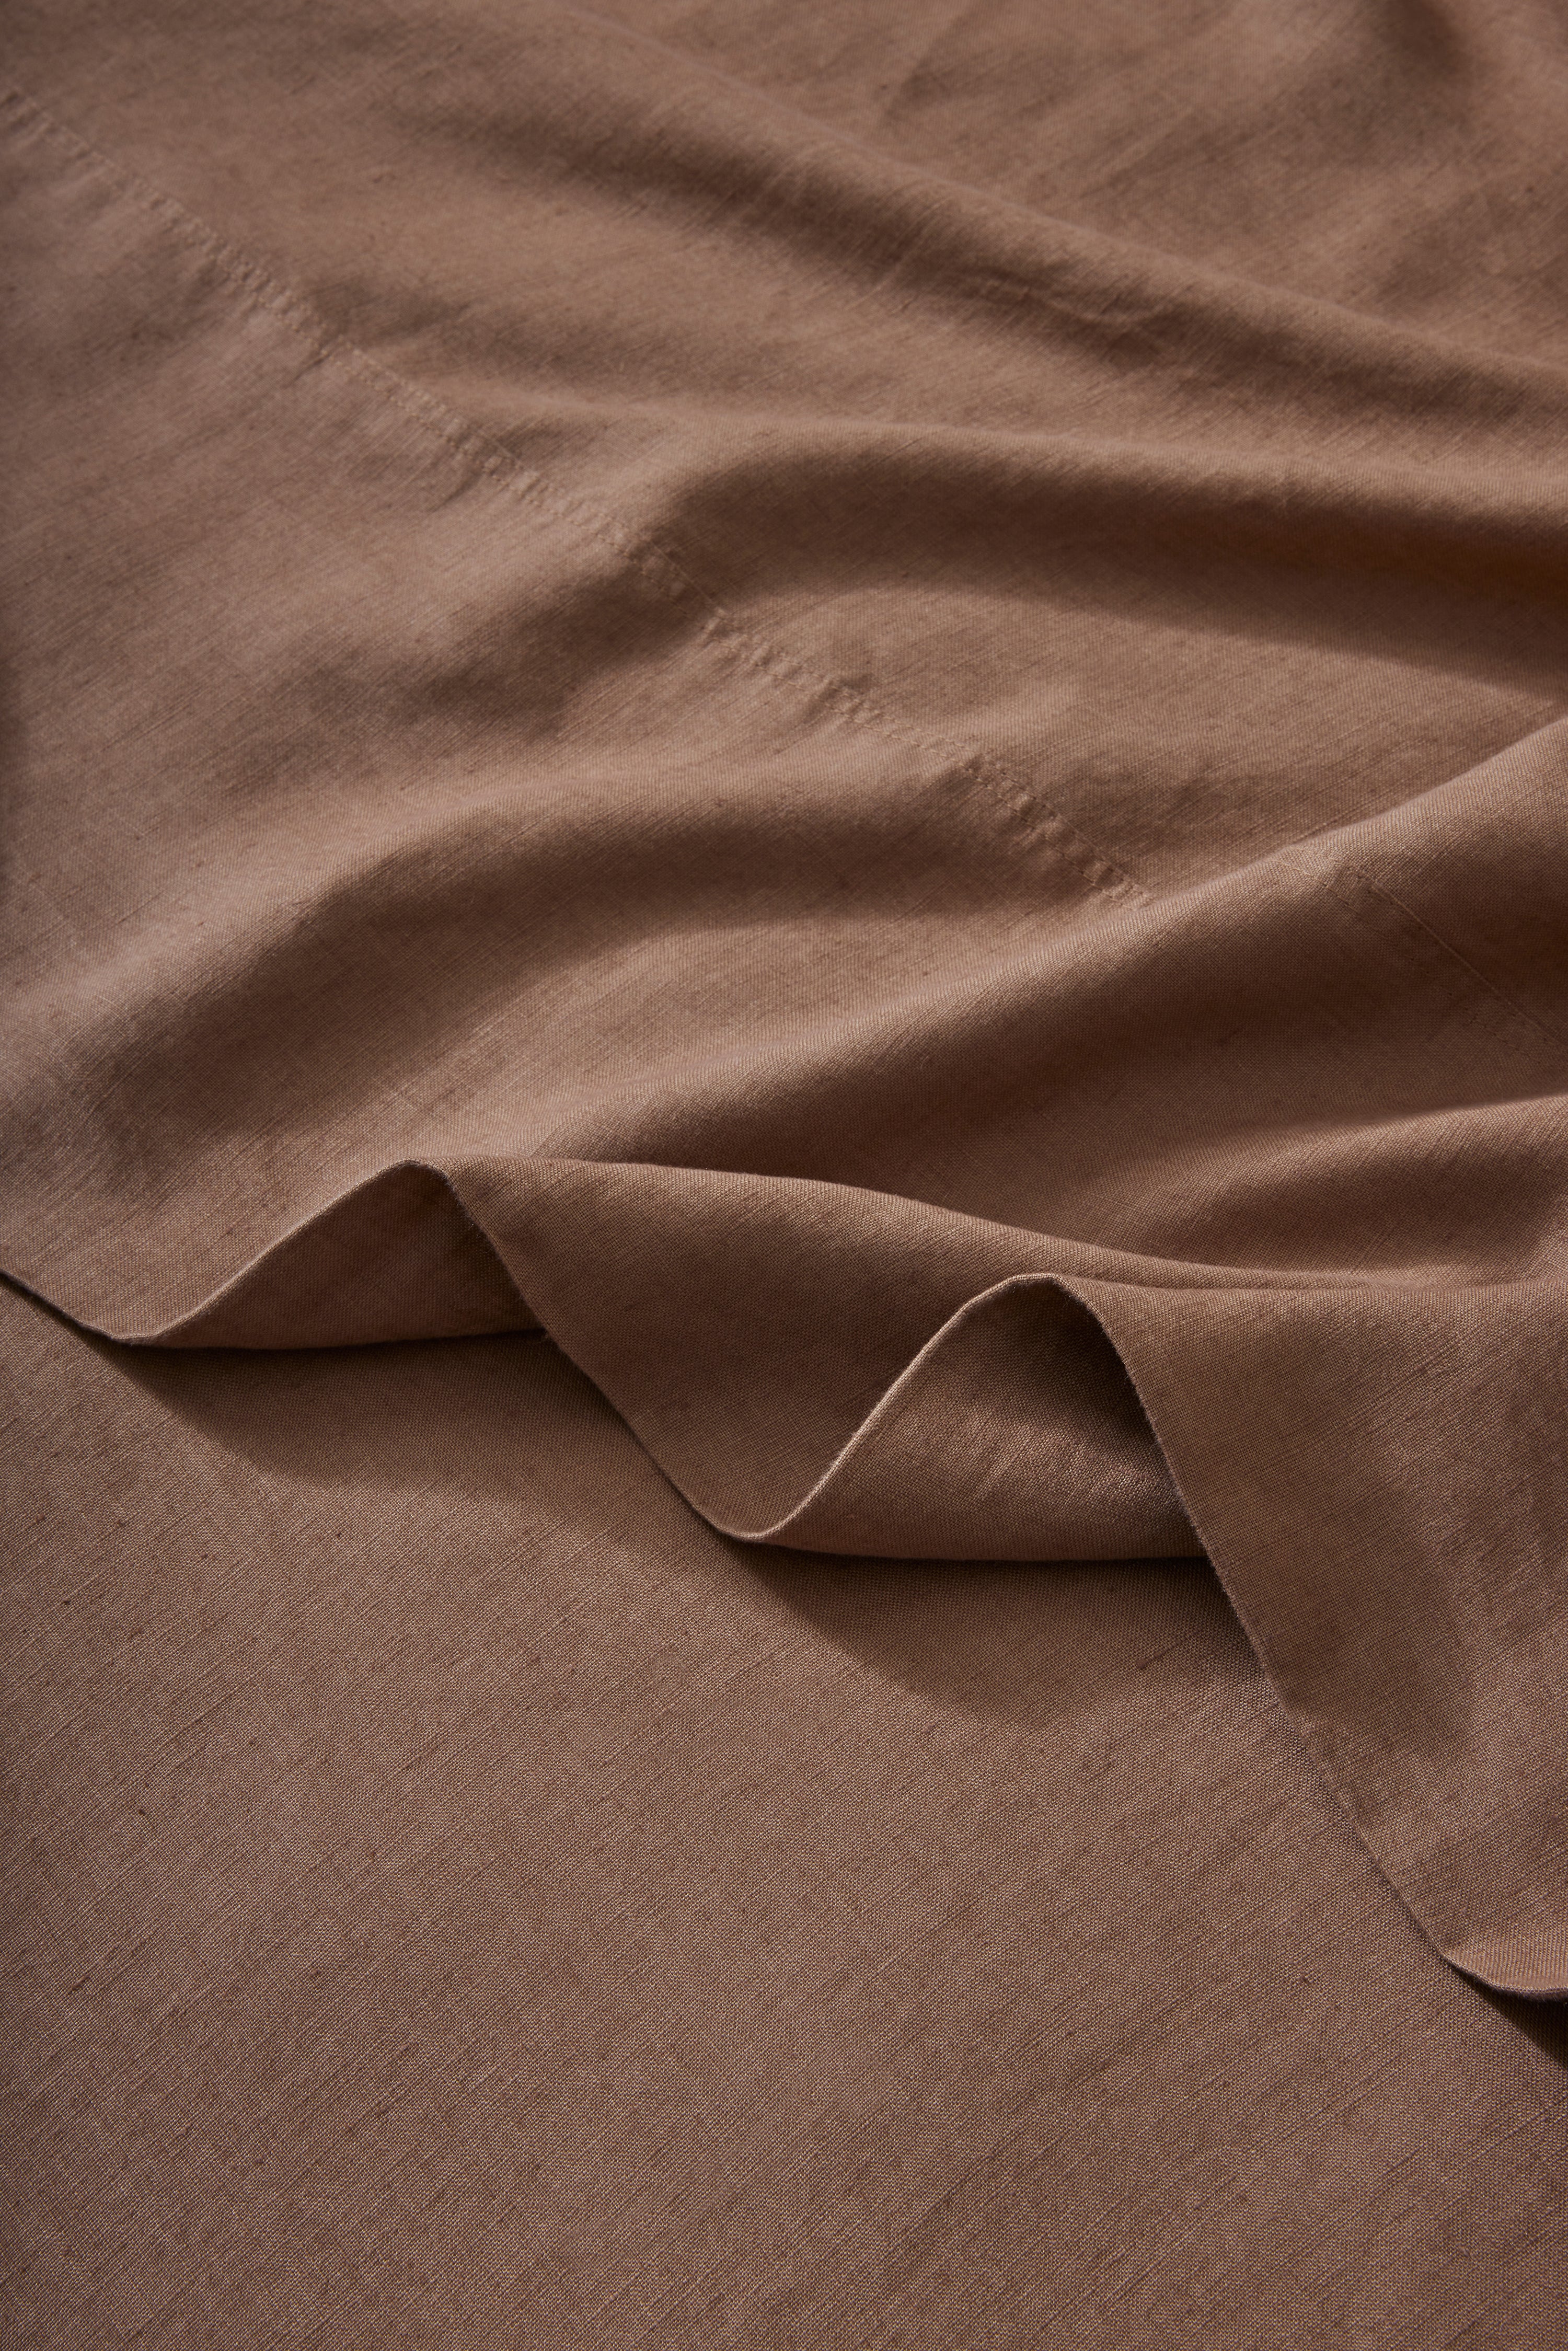 Double Bed Ravello Linen Flat Sheet